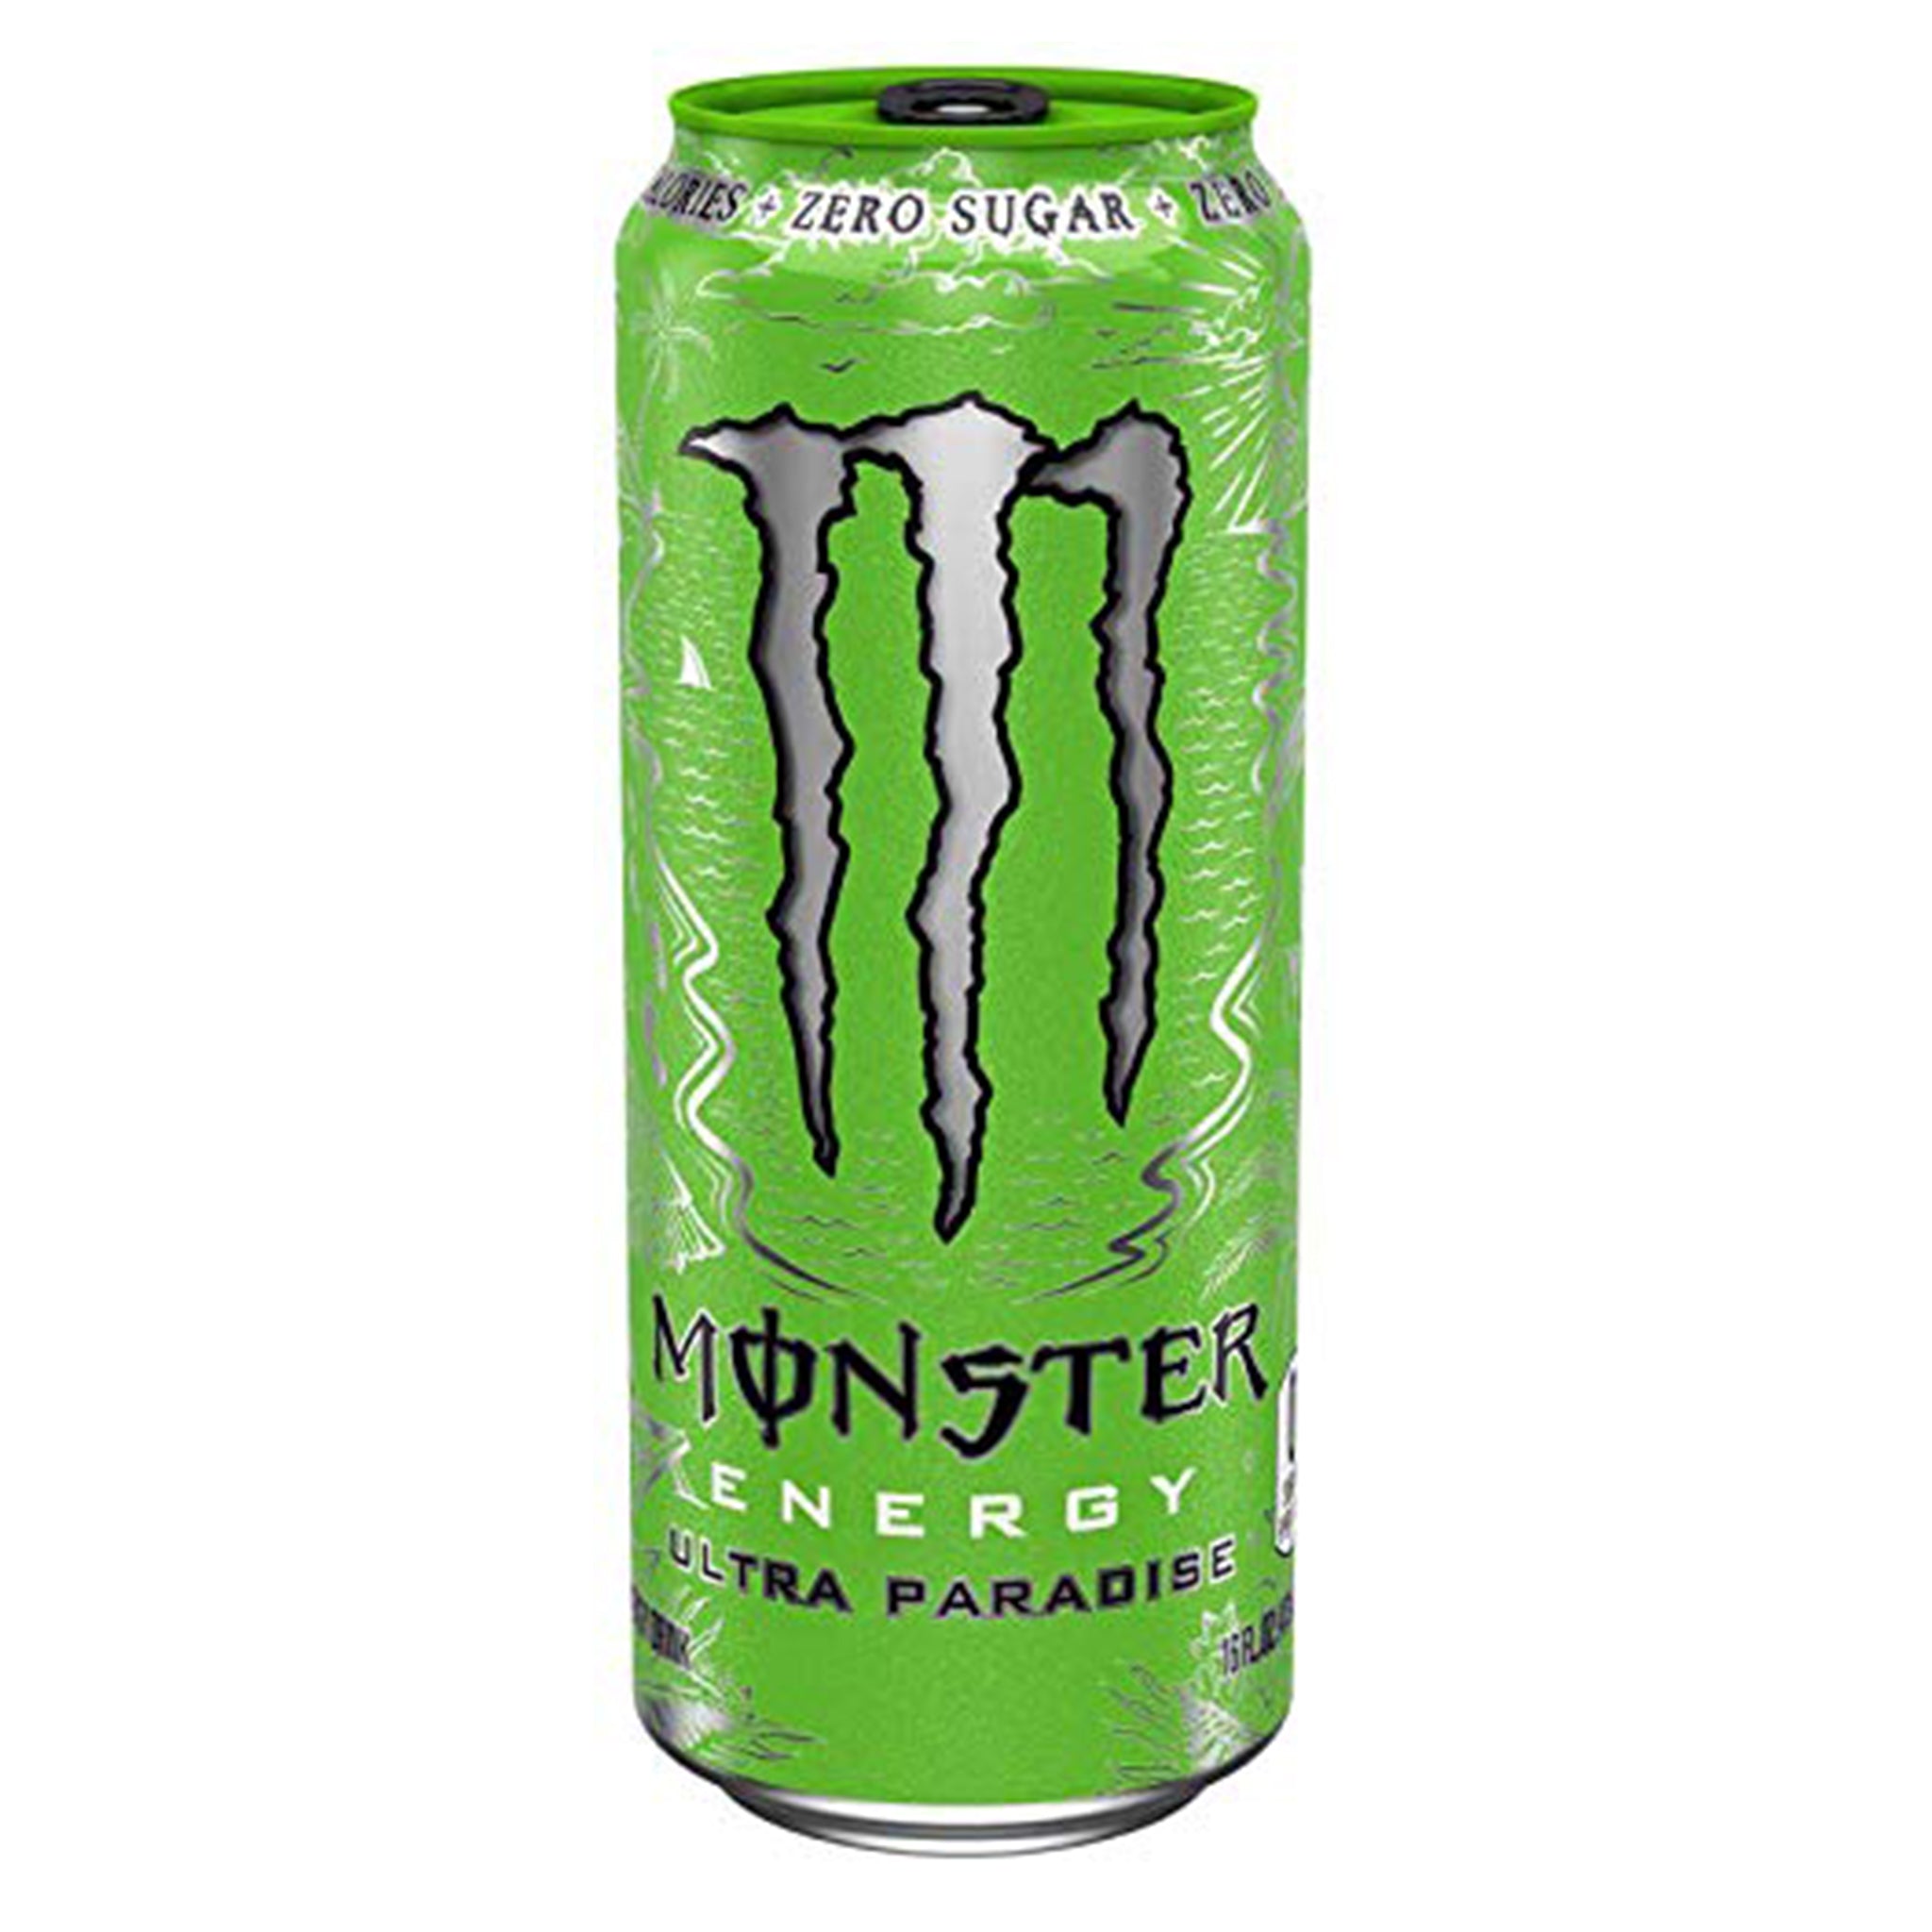 Monster Energy Zero Sugar - Kiwi, Lime & Cucumber